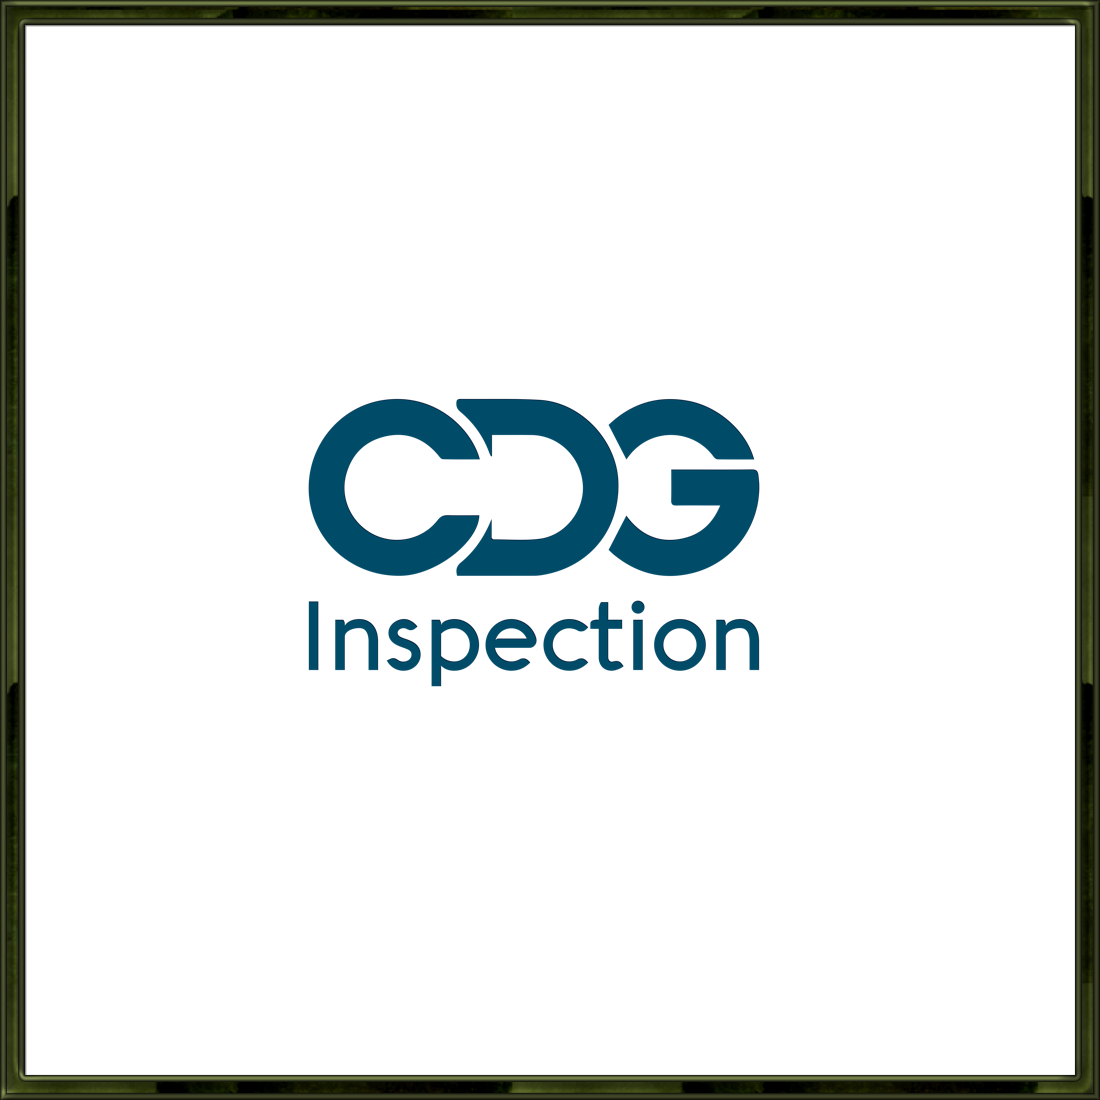 Best Advertisement agencies CDG Inspection Ltd